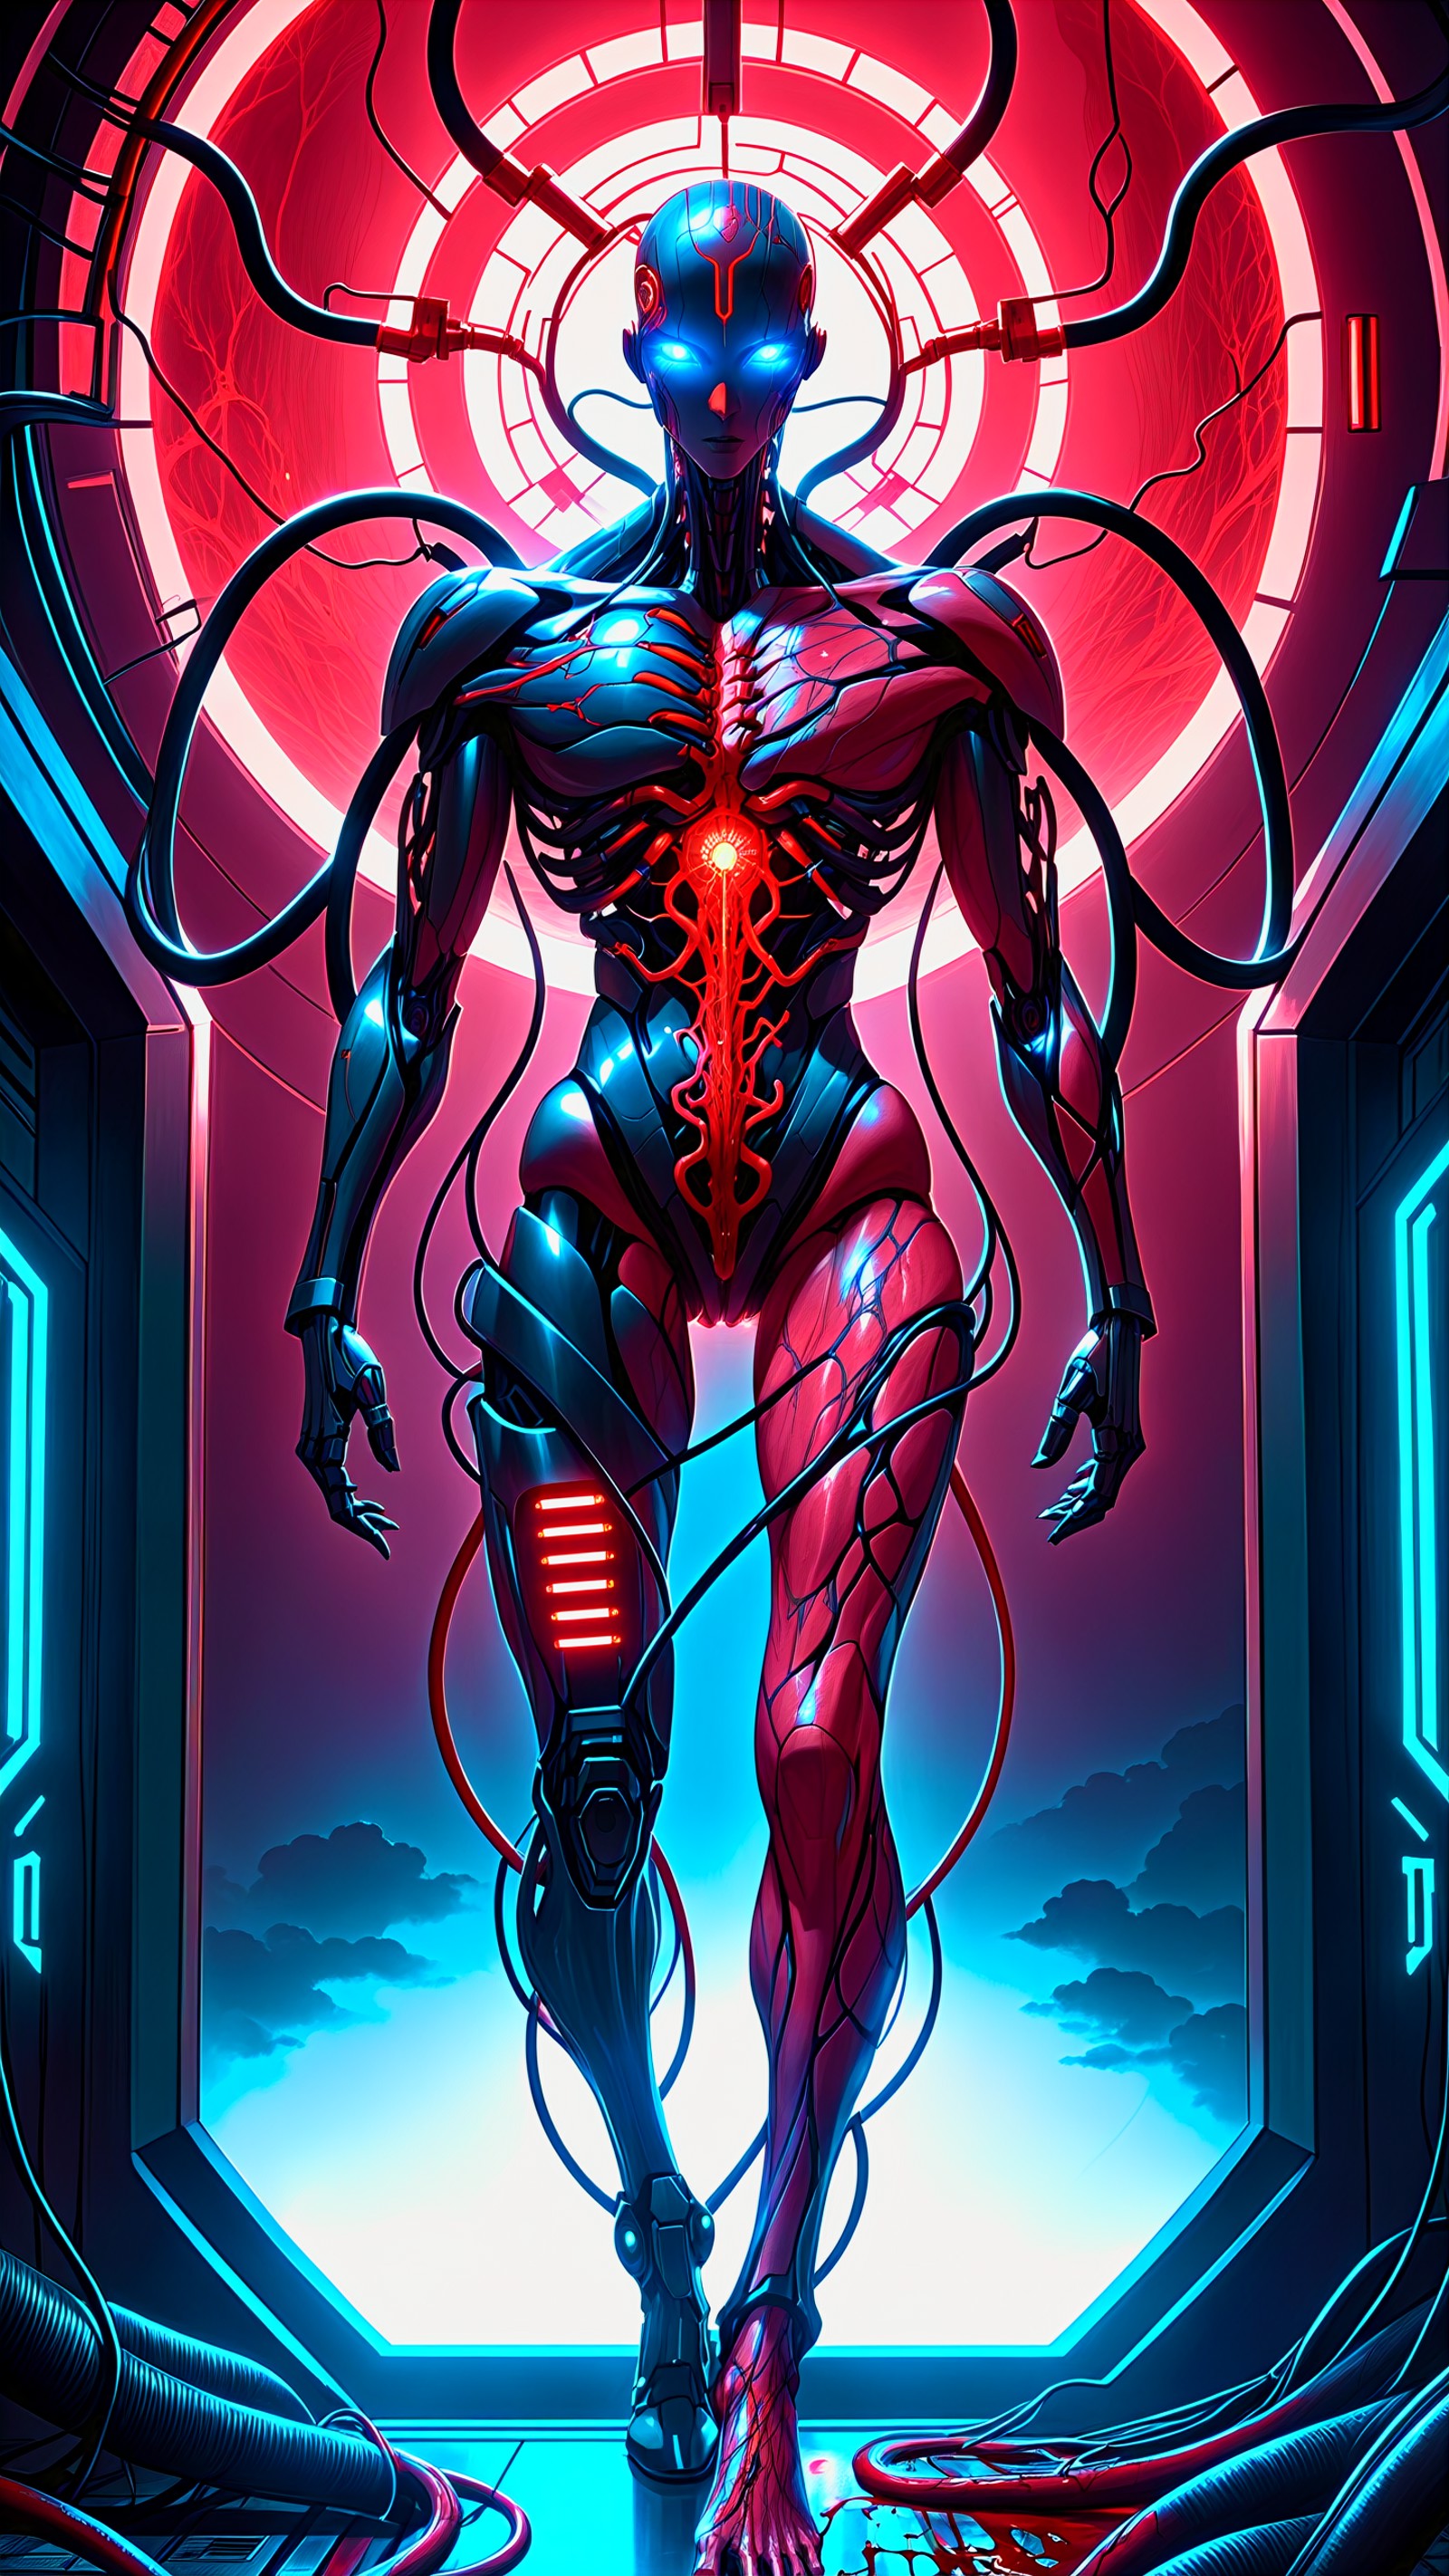 biomechanical cyberpunk a cybermutant fleshmutant, pulsating flesh and biomechanical limbs, fusion of flesh and machine, d...